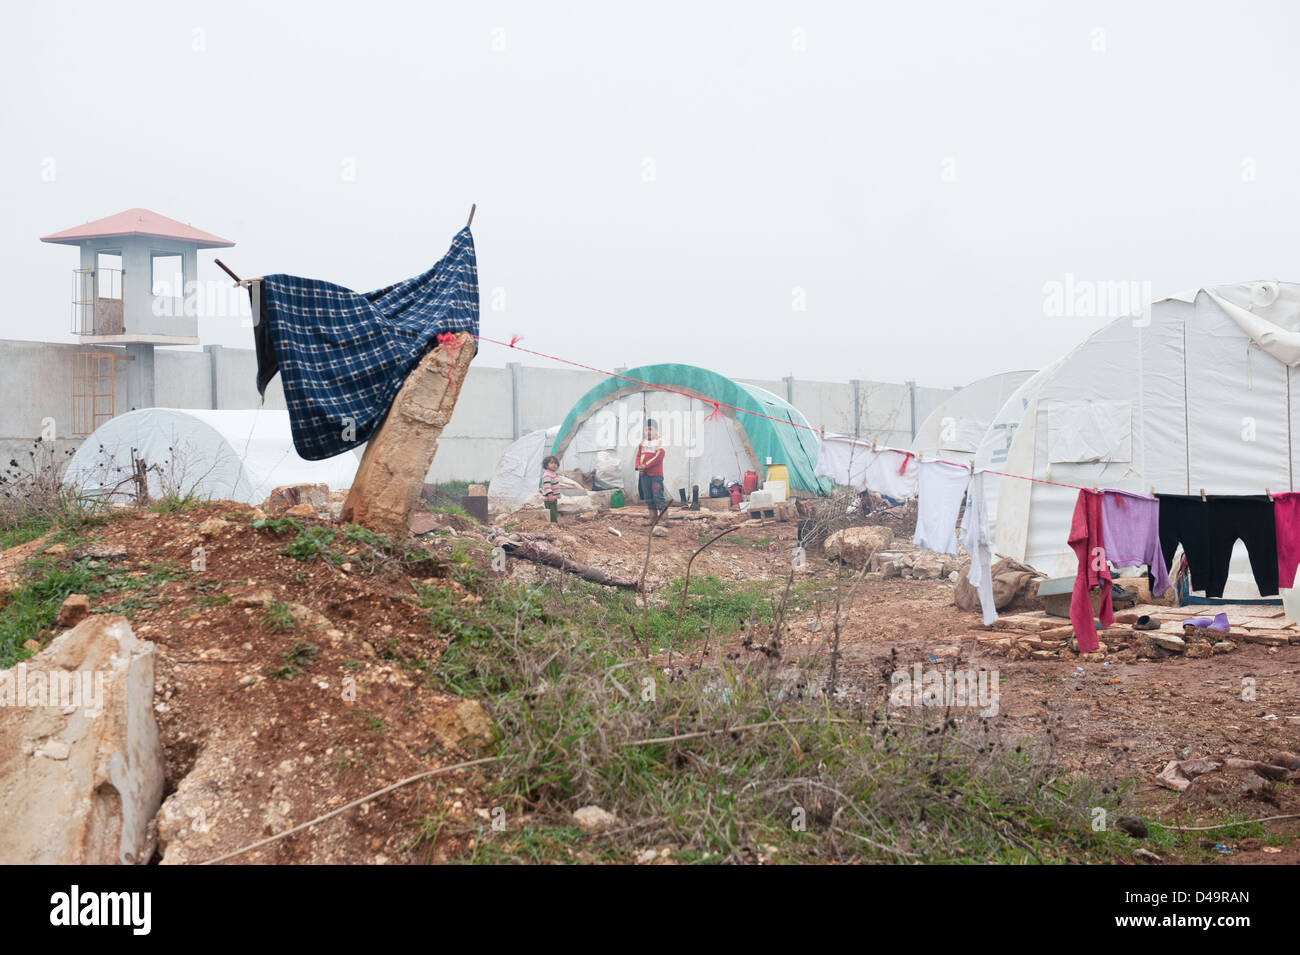 The Azaz Refugee Camp on the Turkish border, Syria Stock Photo